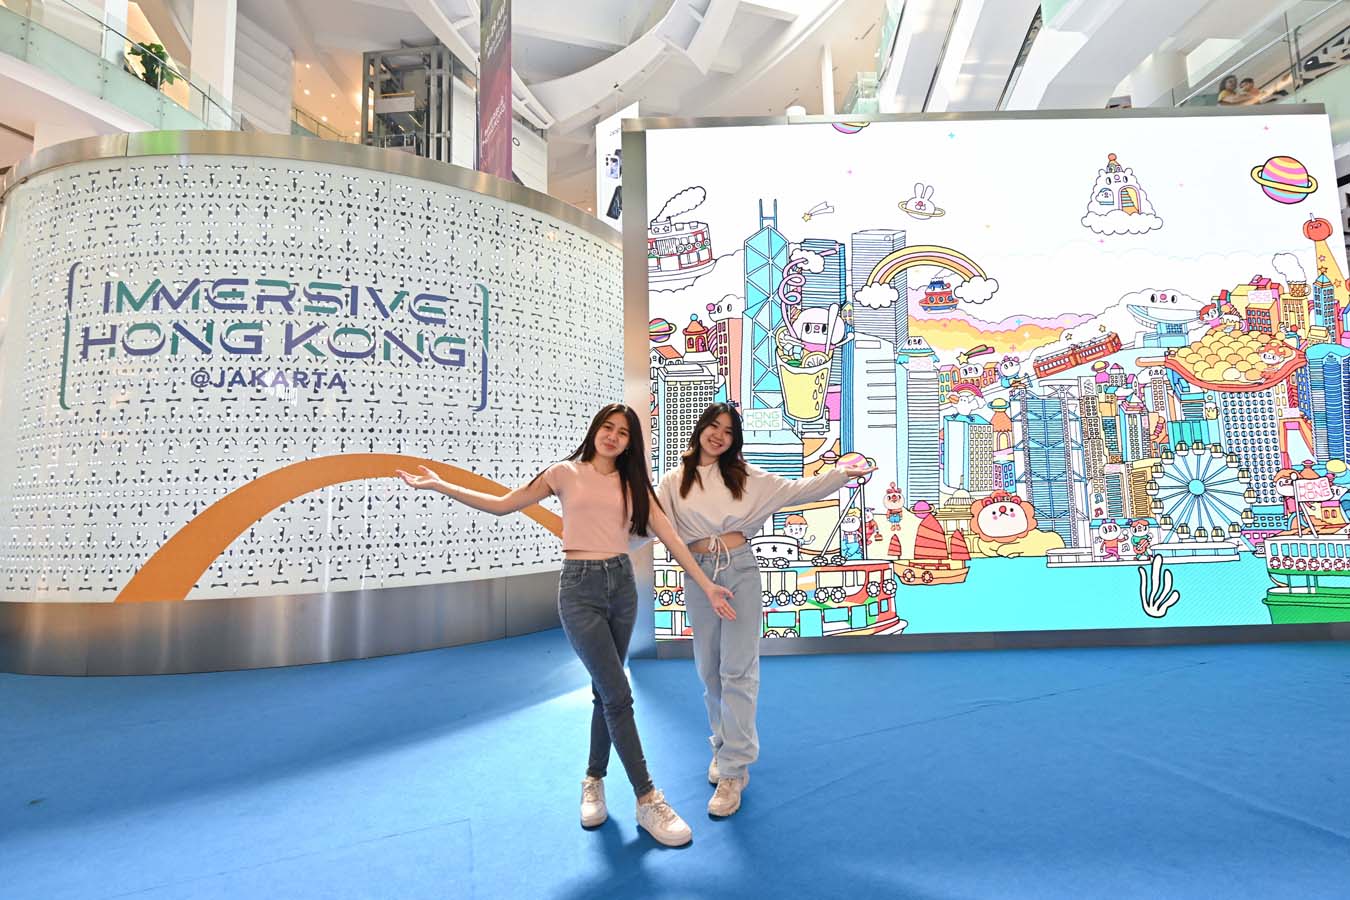 Immersive Hong Kong Exhibition in Jakarta (2023)